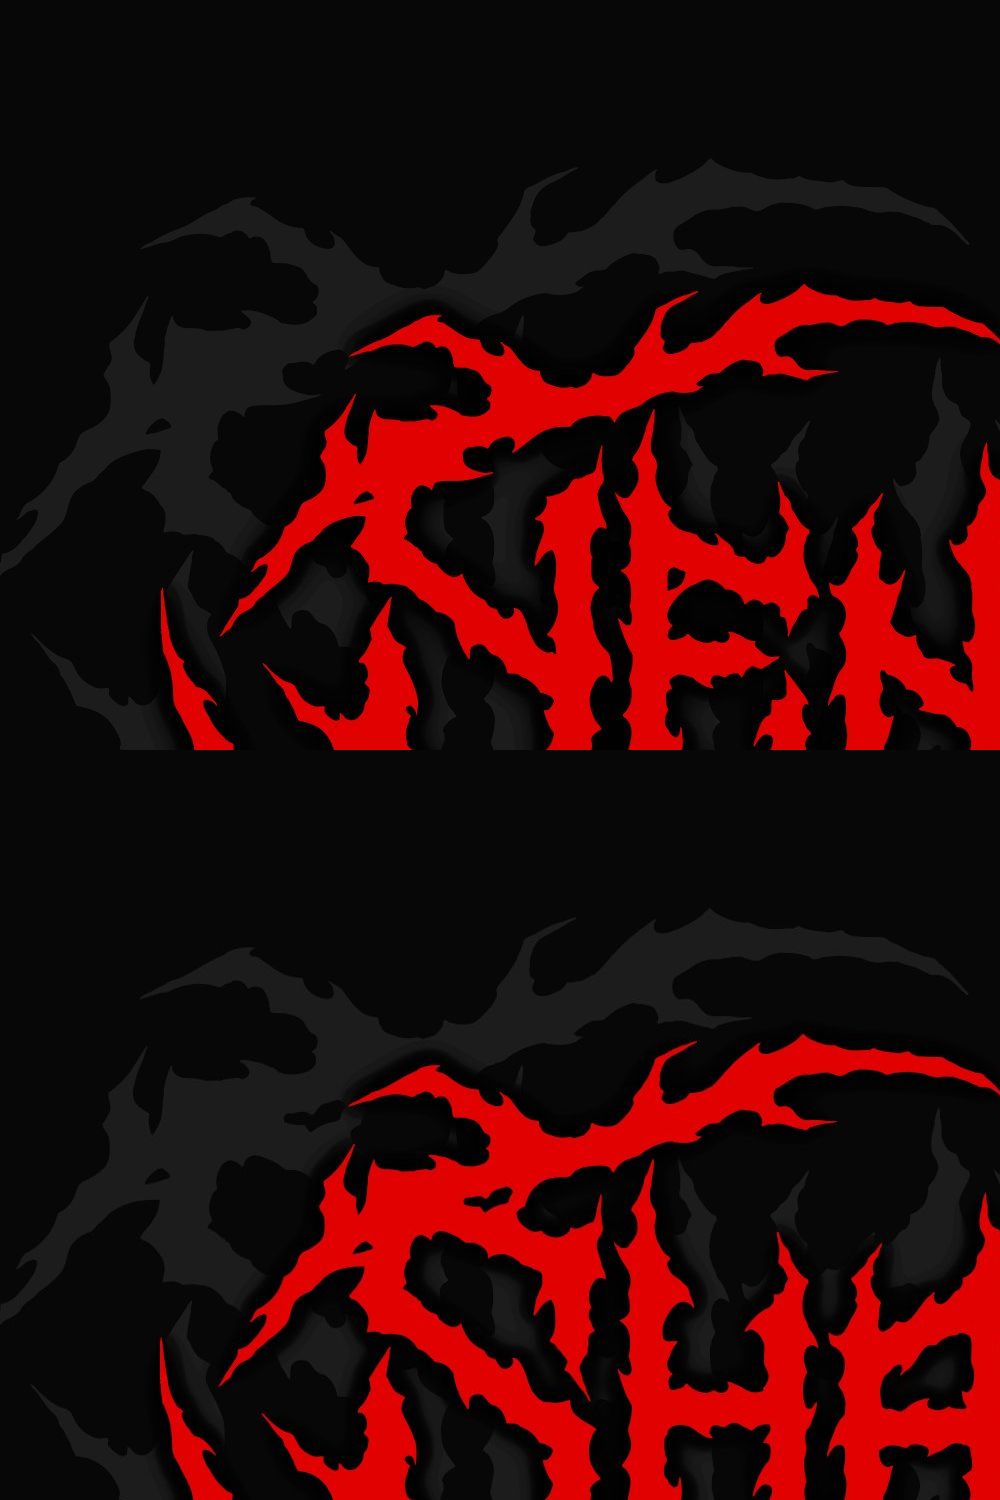 Yenisack | Black Metal Font Vol. 5 pinterest preview image.